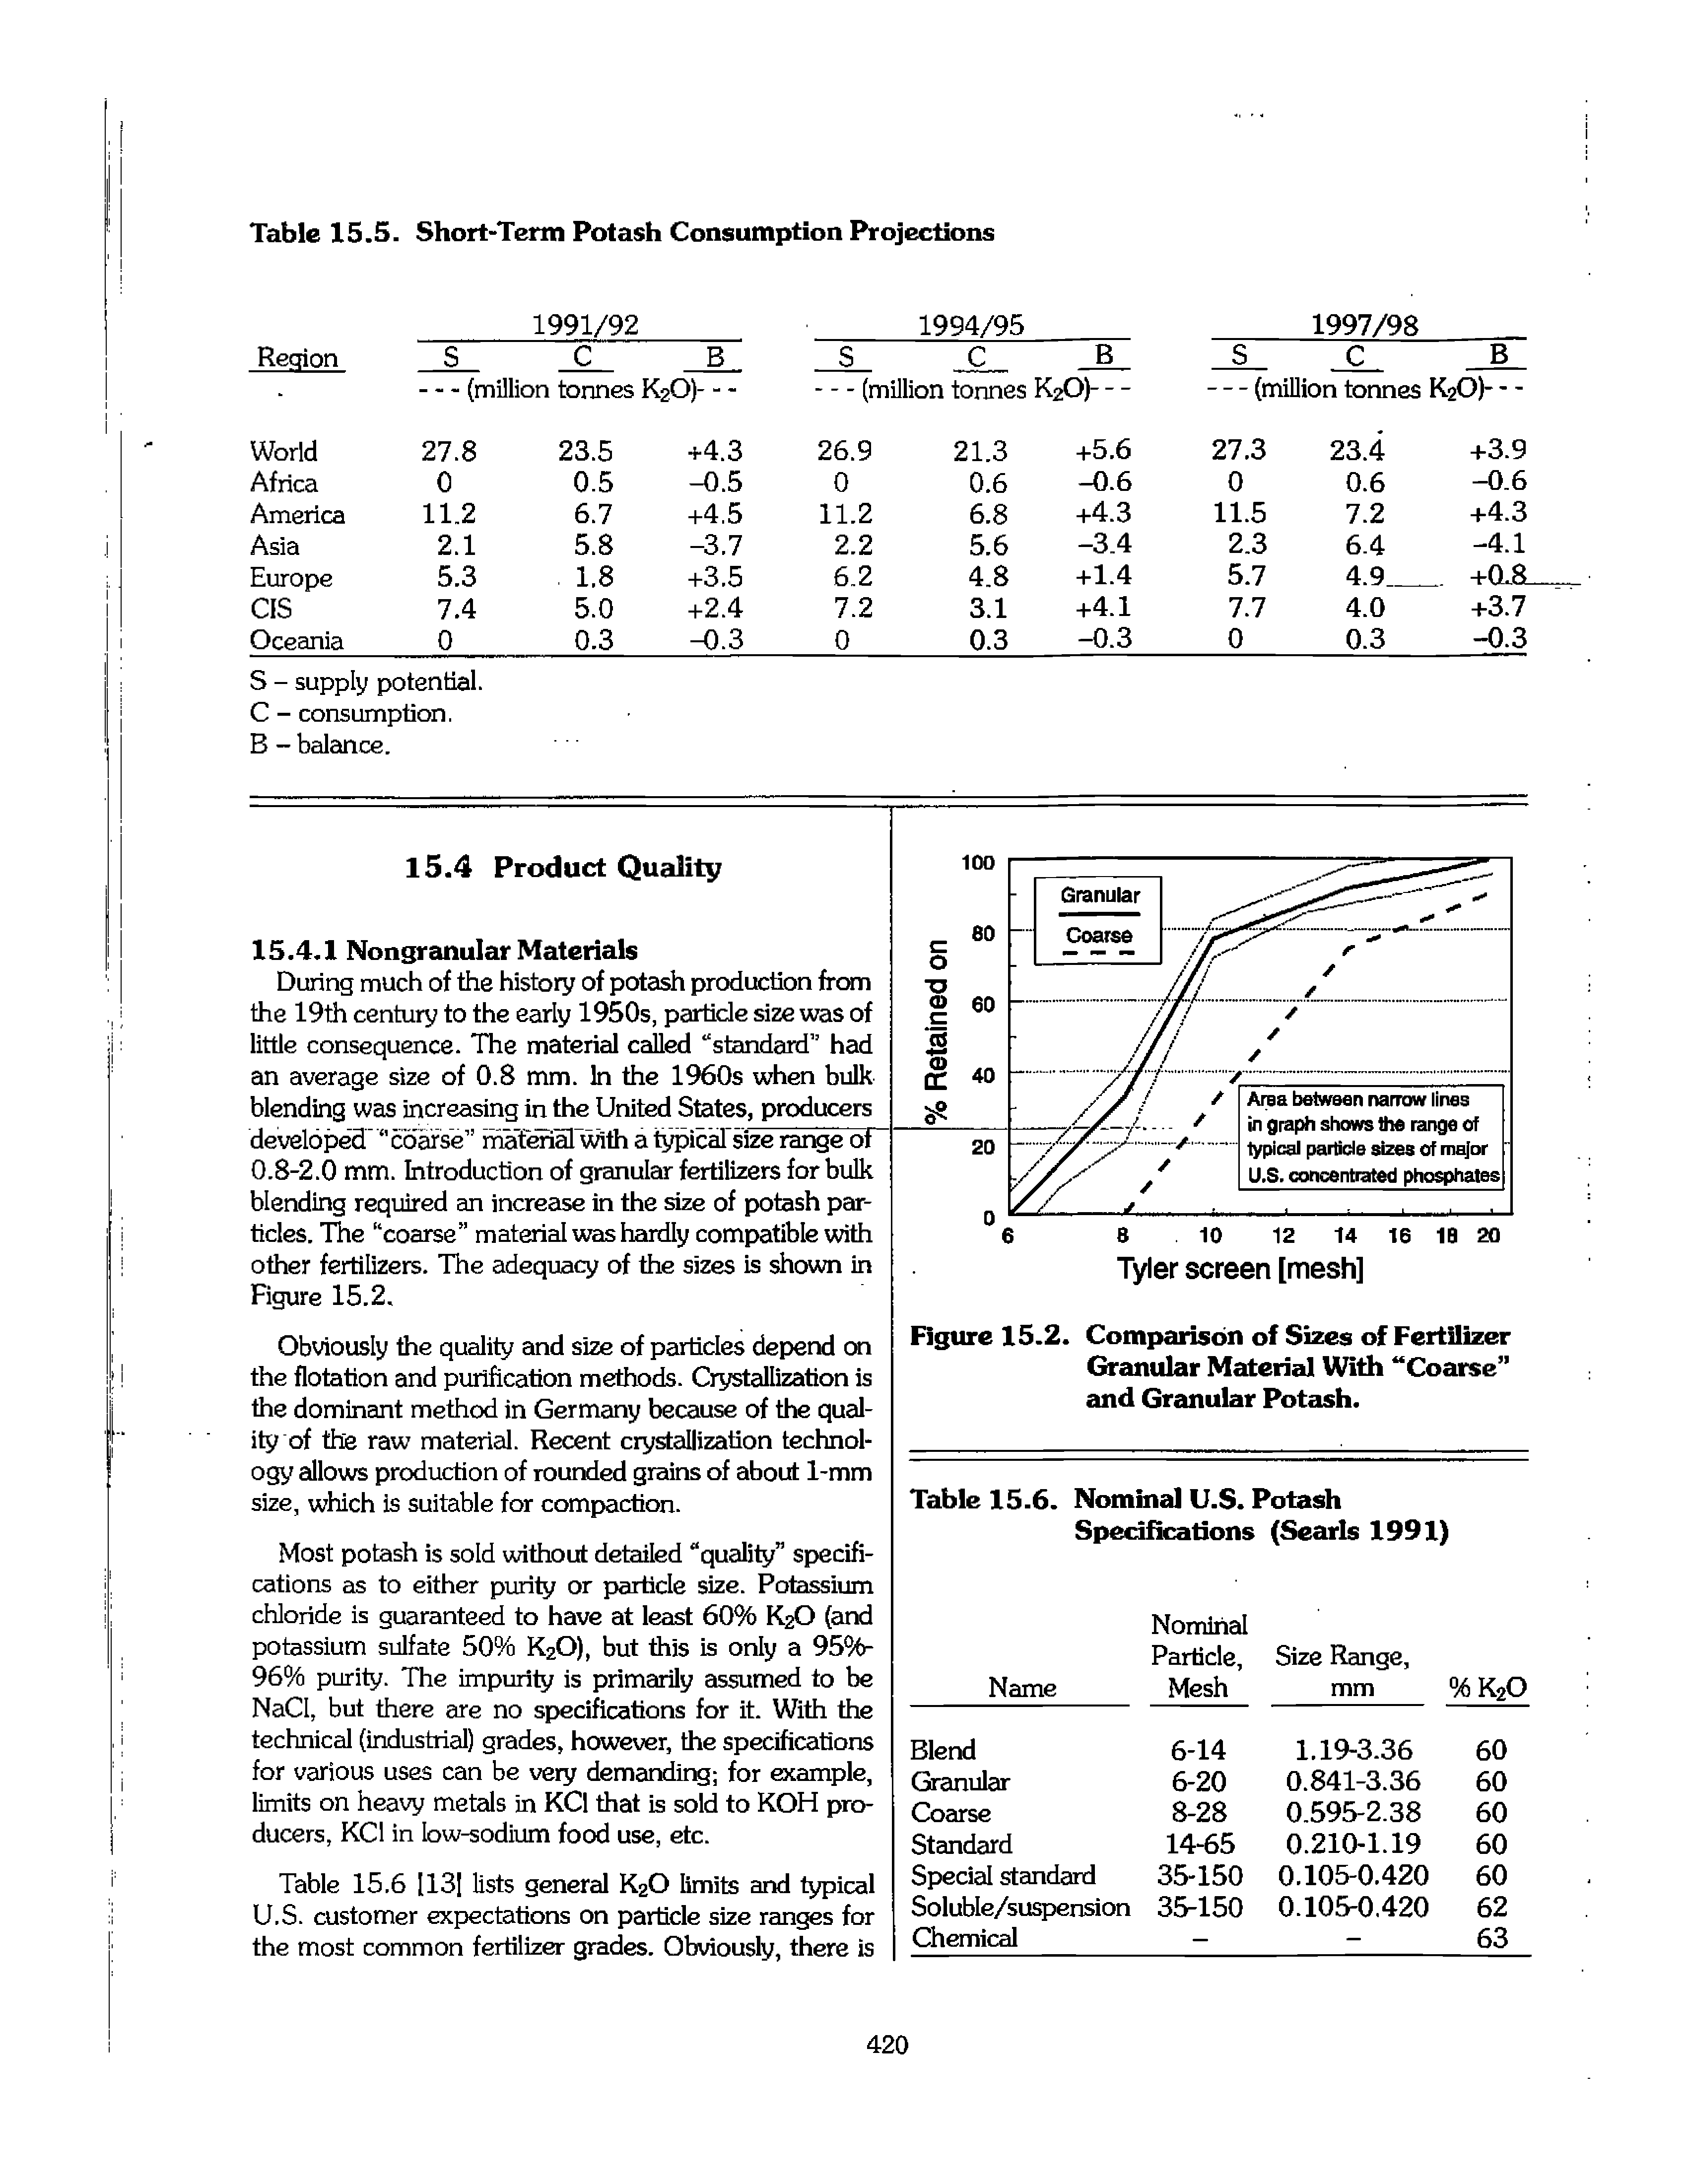 Figure 15.2. Comparison of Sizes of Fertilizer Granular Material With "Coarse and Granular Potash.